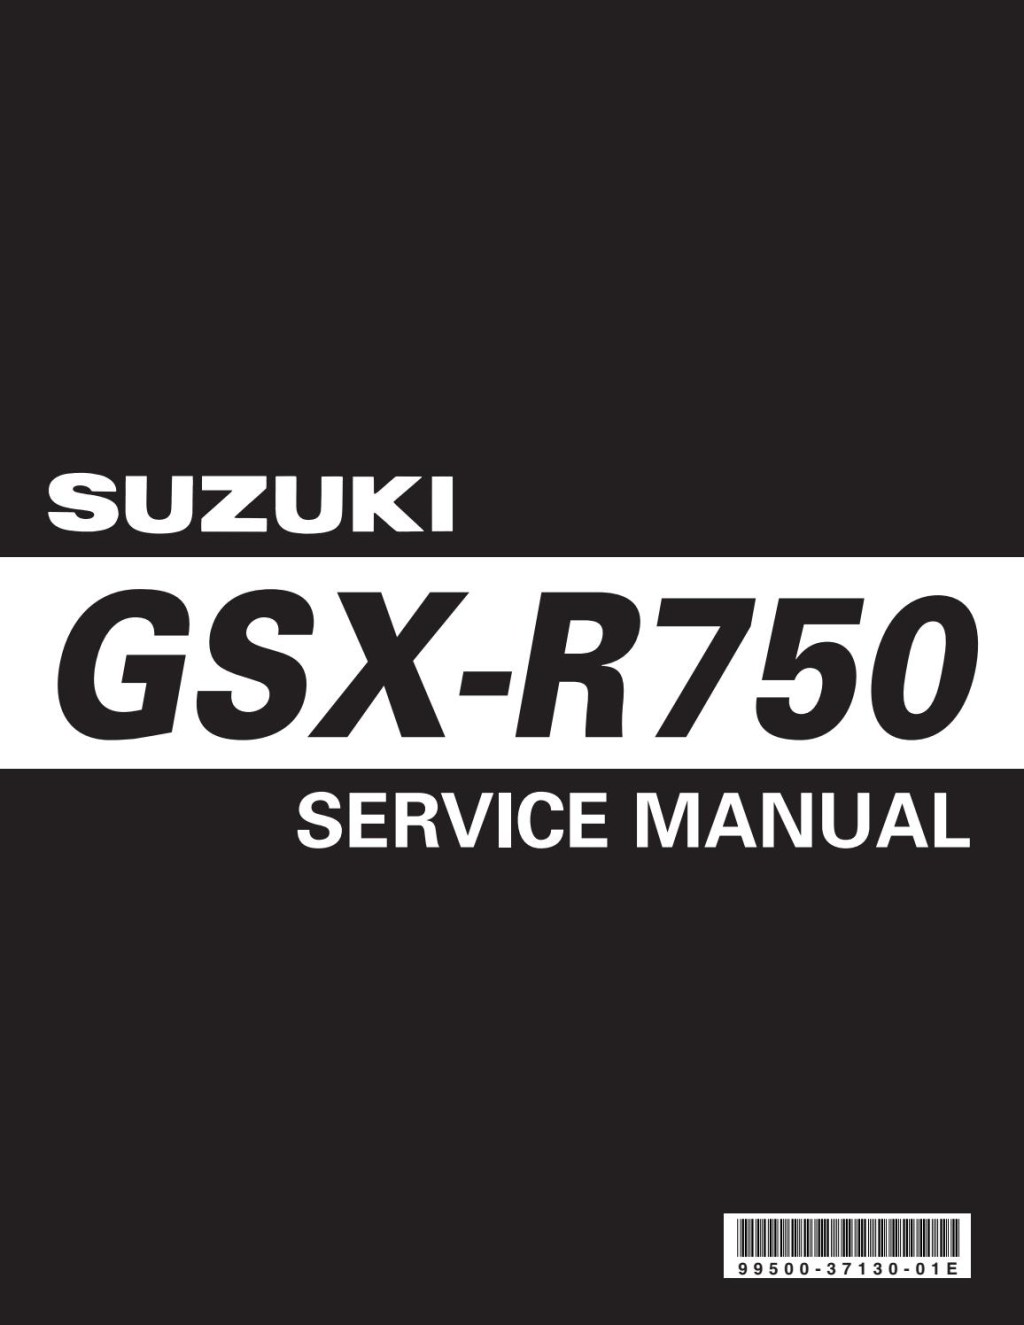 07 suzuki gsxr 750 owners manual - Suzuki GSX-R GSXR Service Repair Manual by